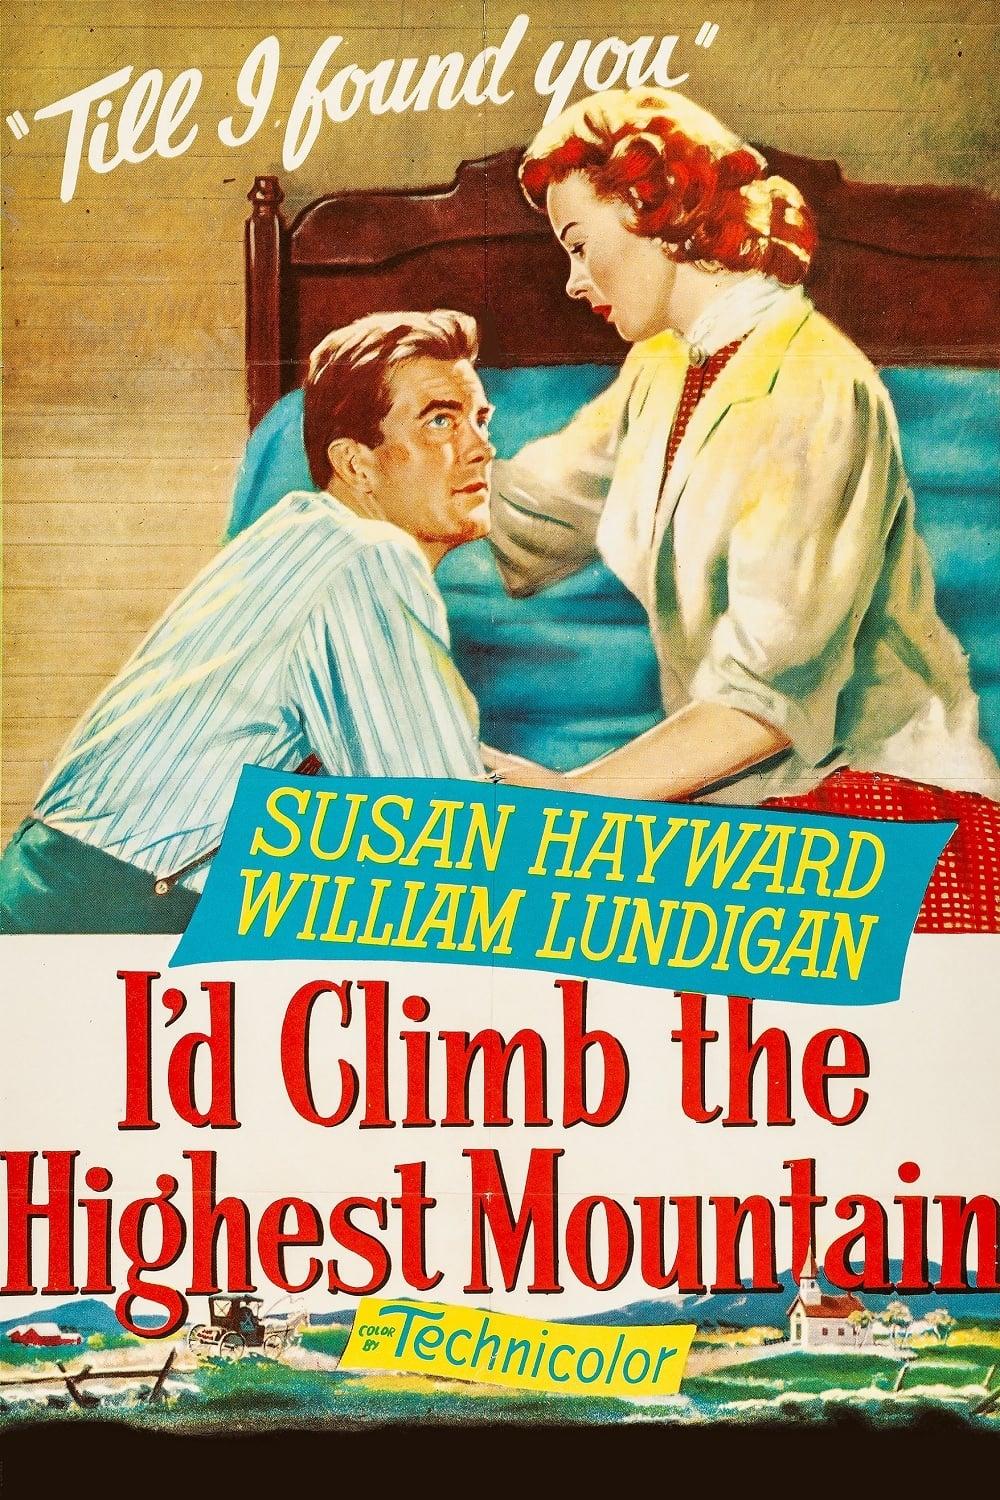 I'd Climb the Highest Mountain poster